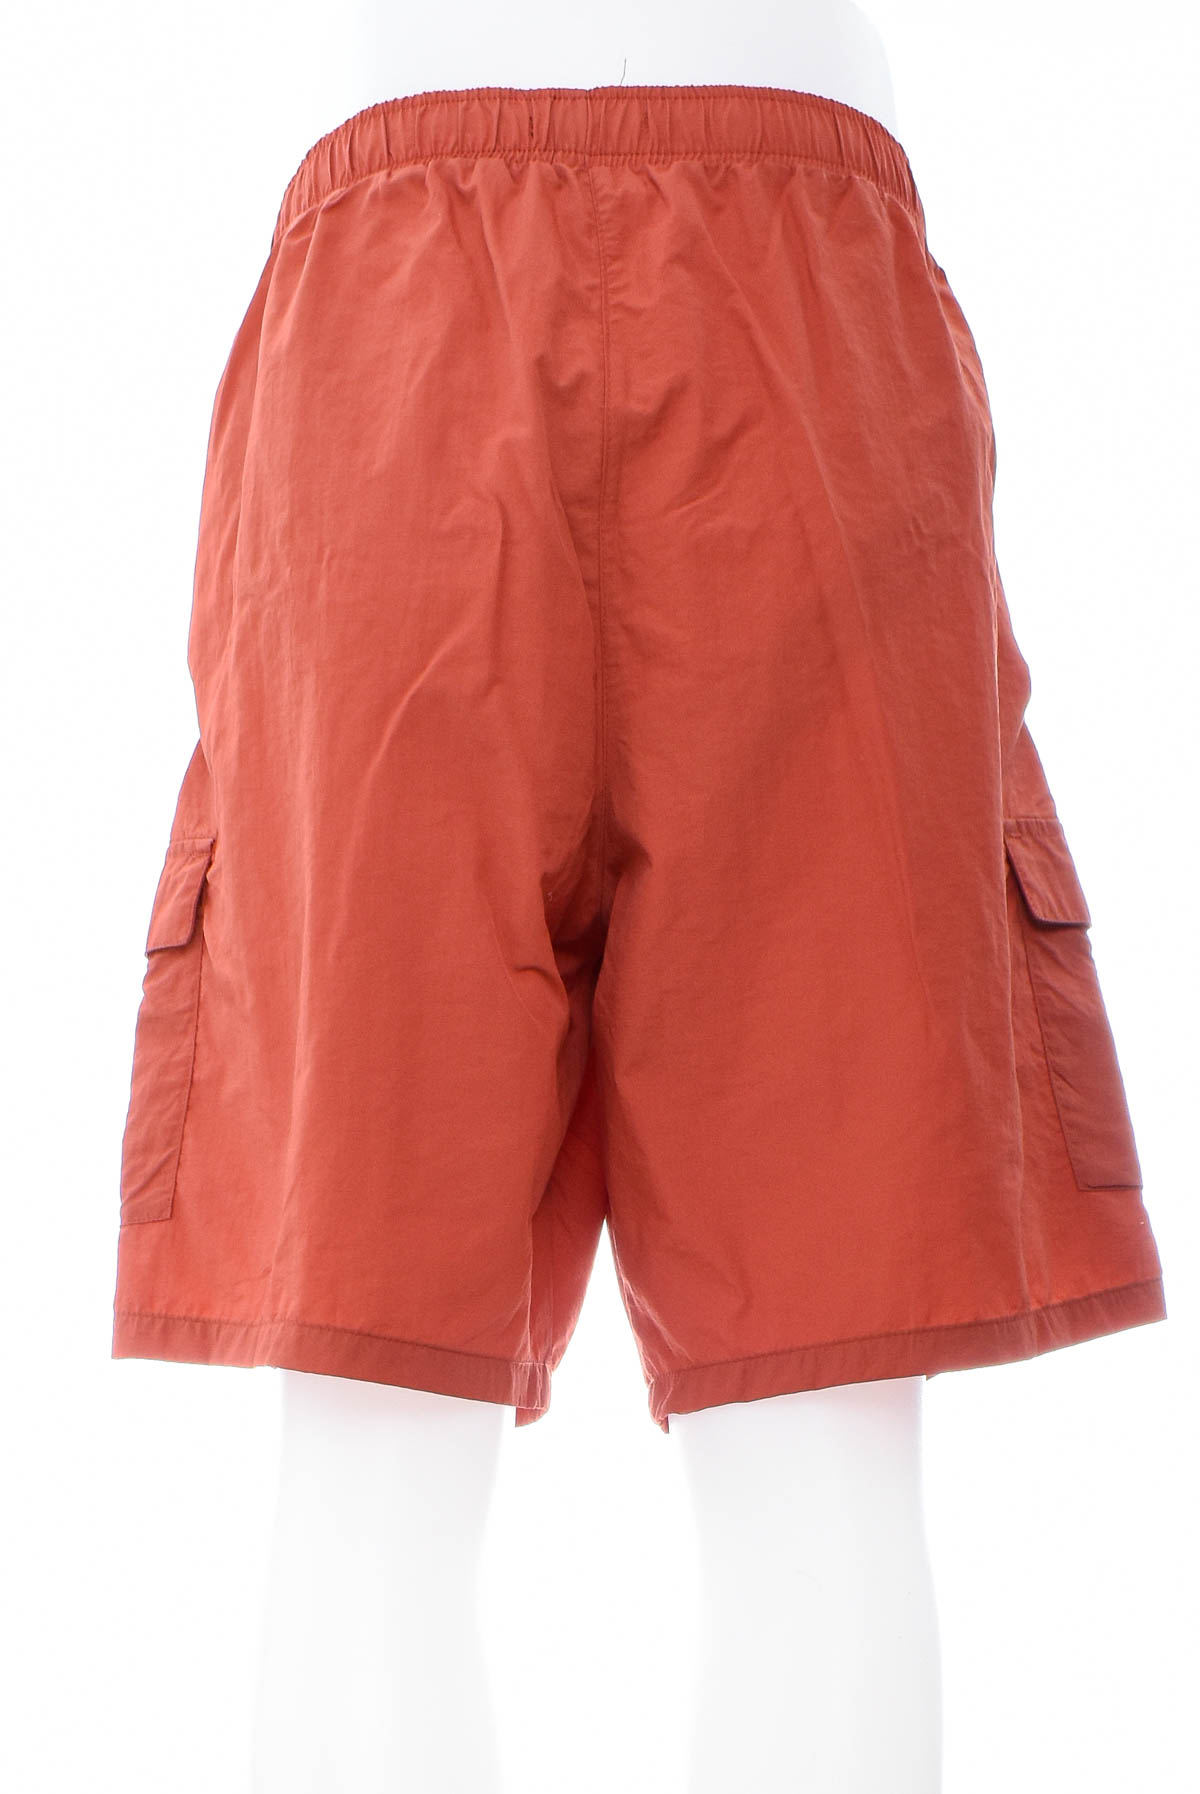 Men's shorts - Dunnes - 1